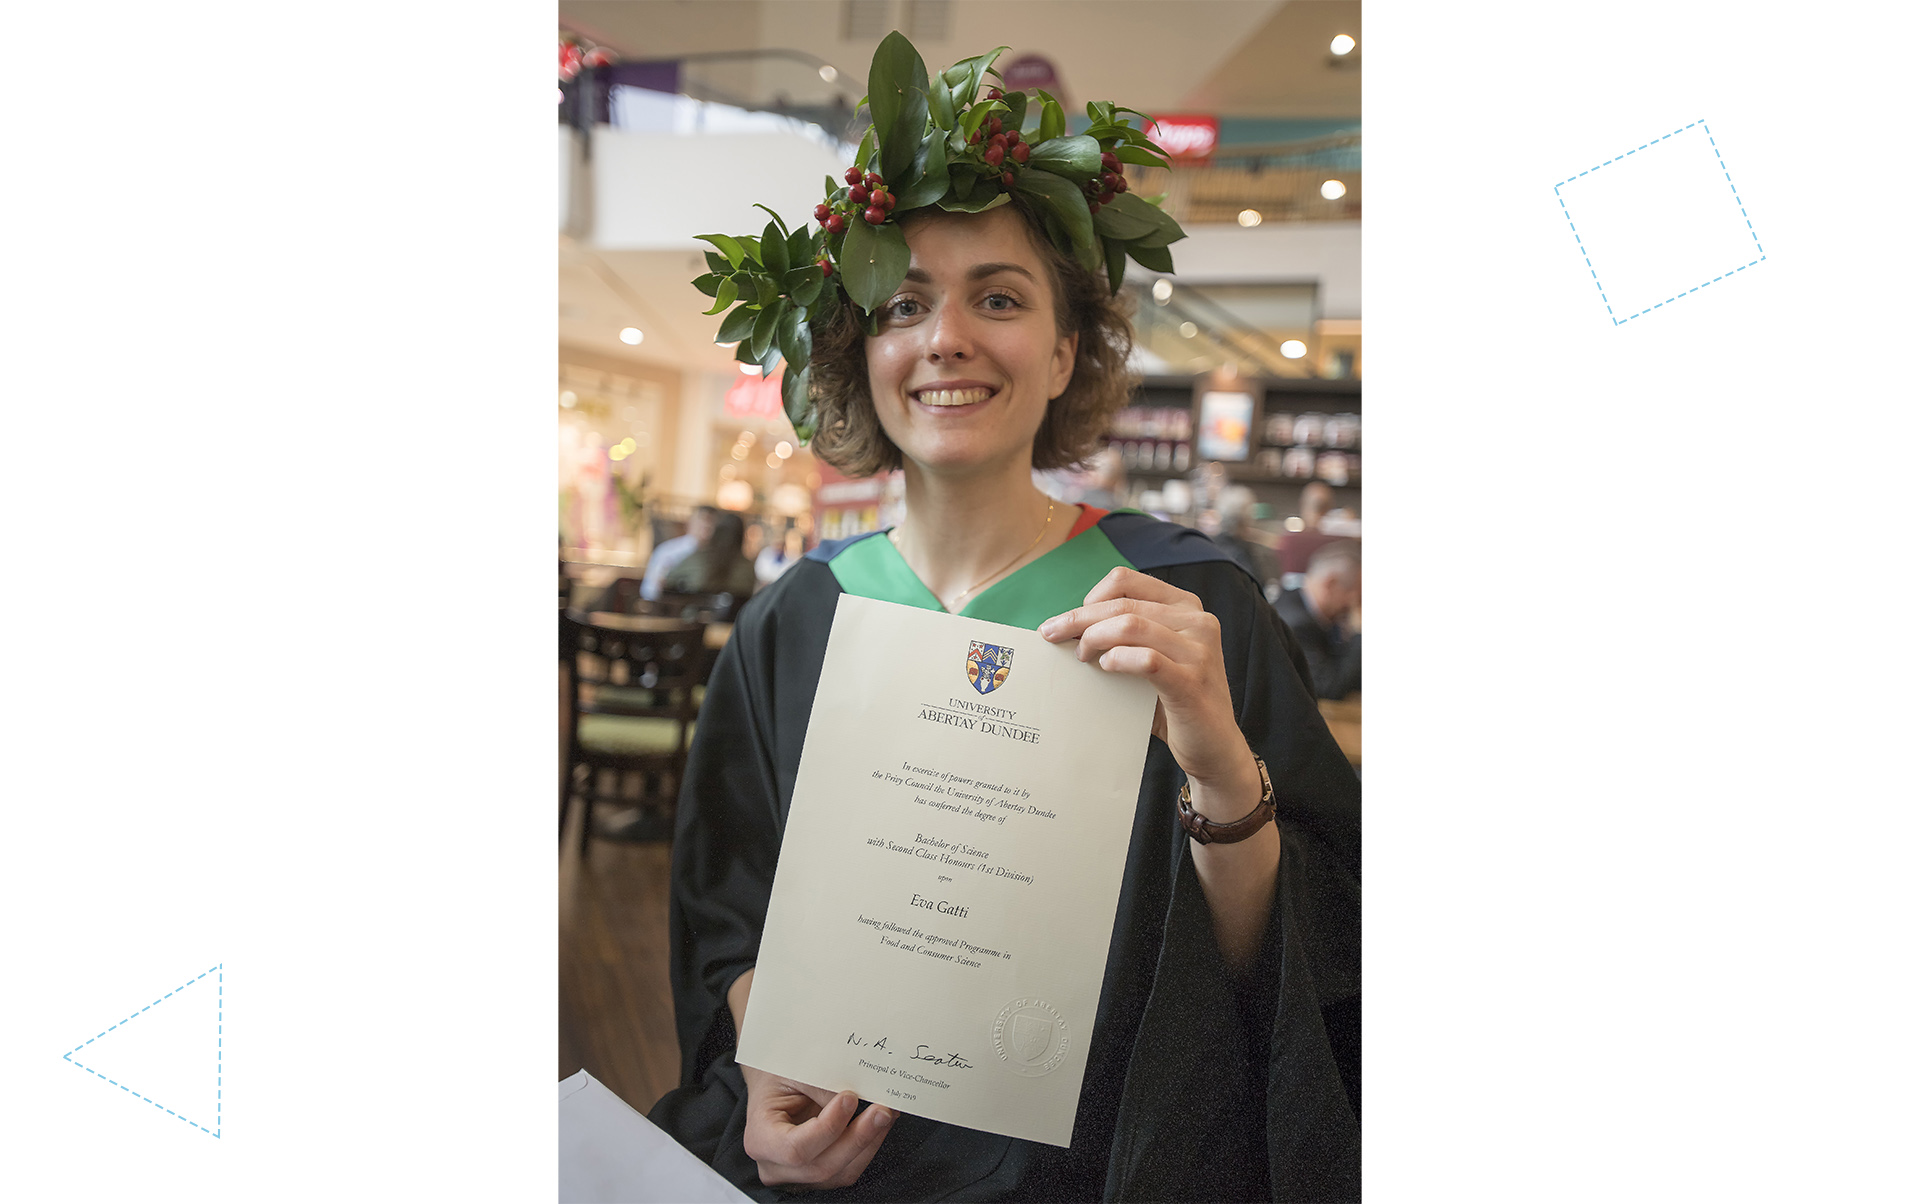 Eva Gatti an Abertay University Graduate in Food and Consumer Science